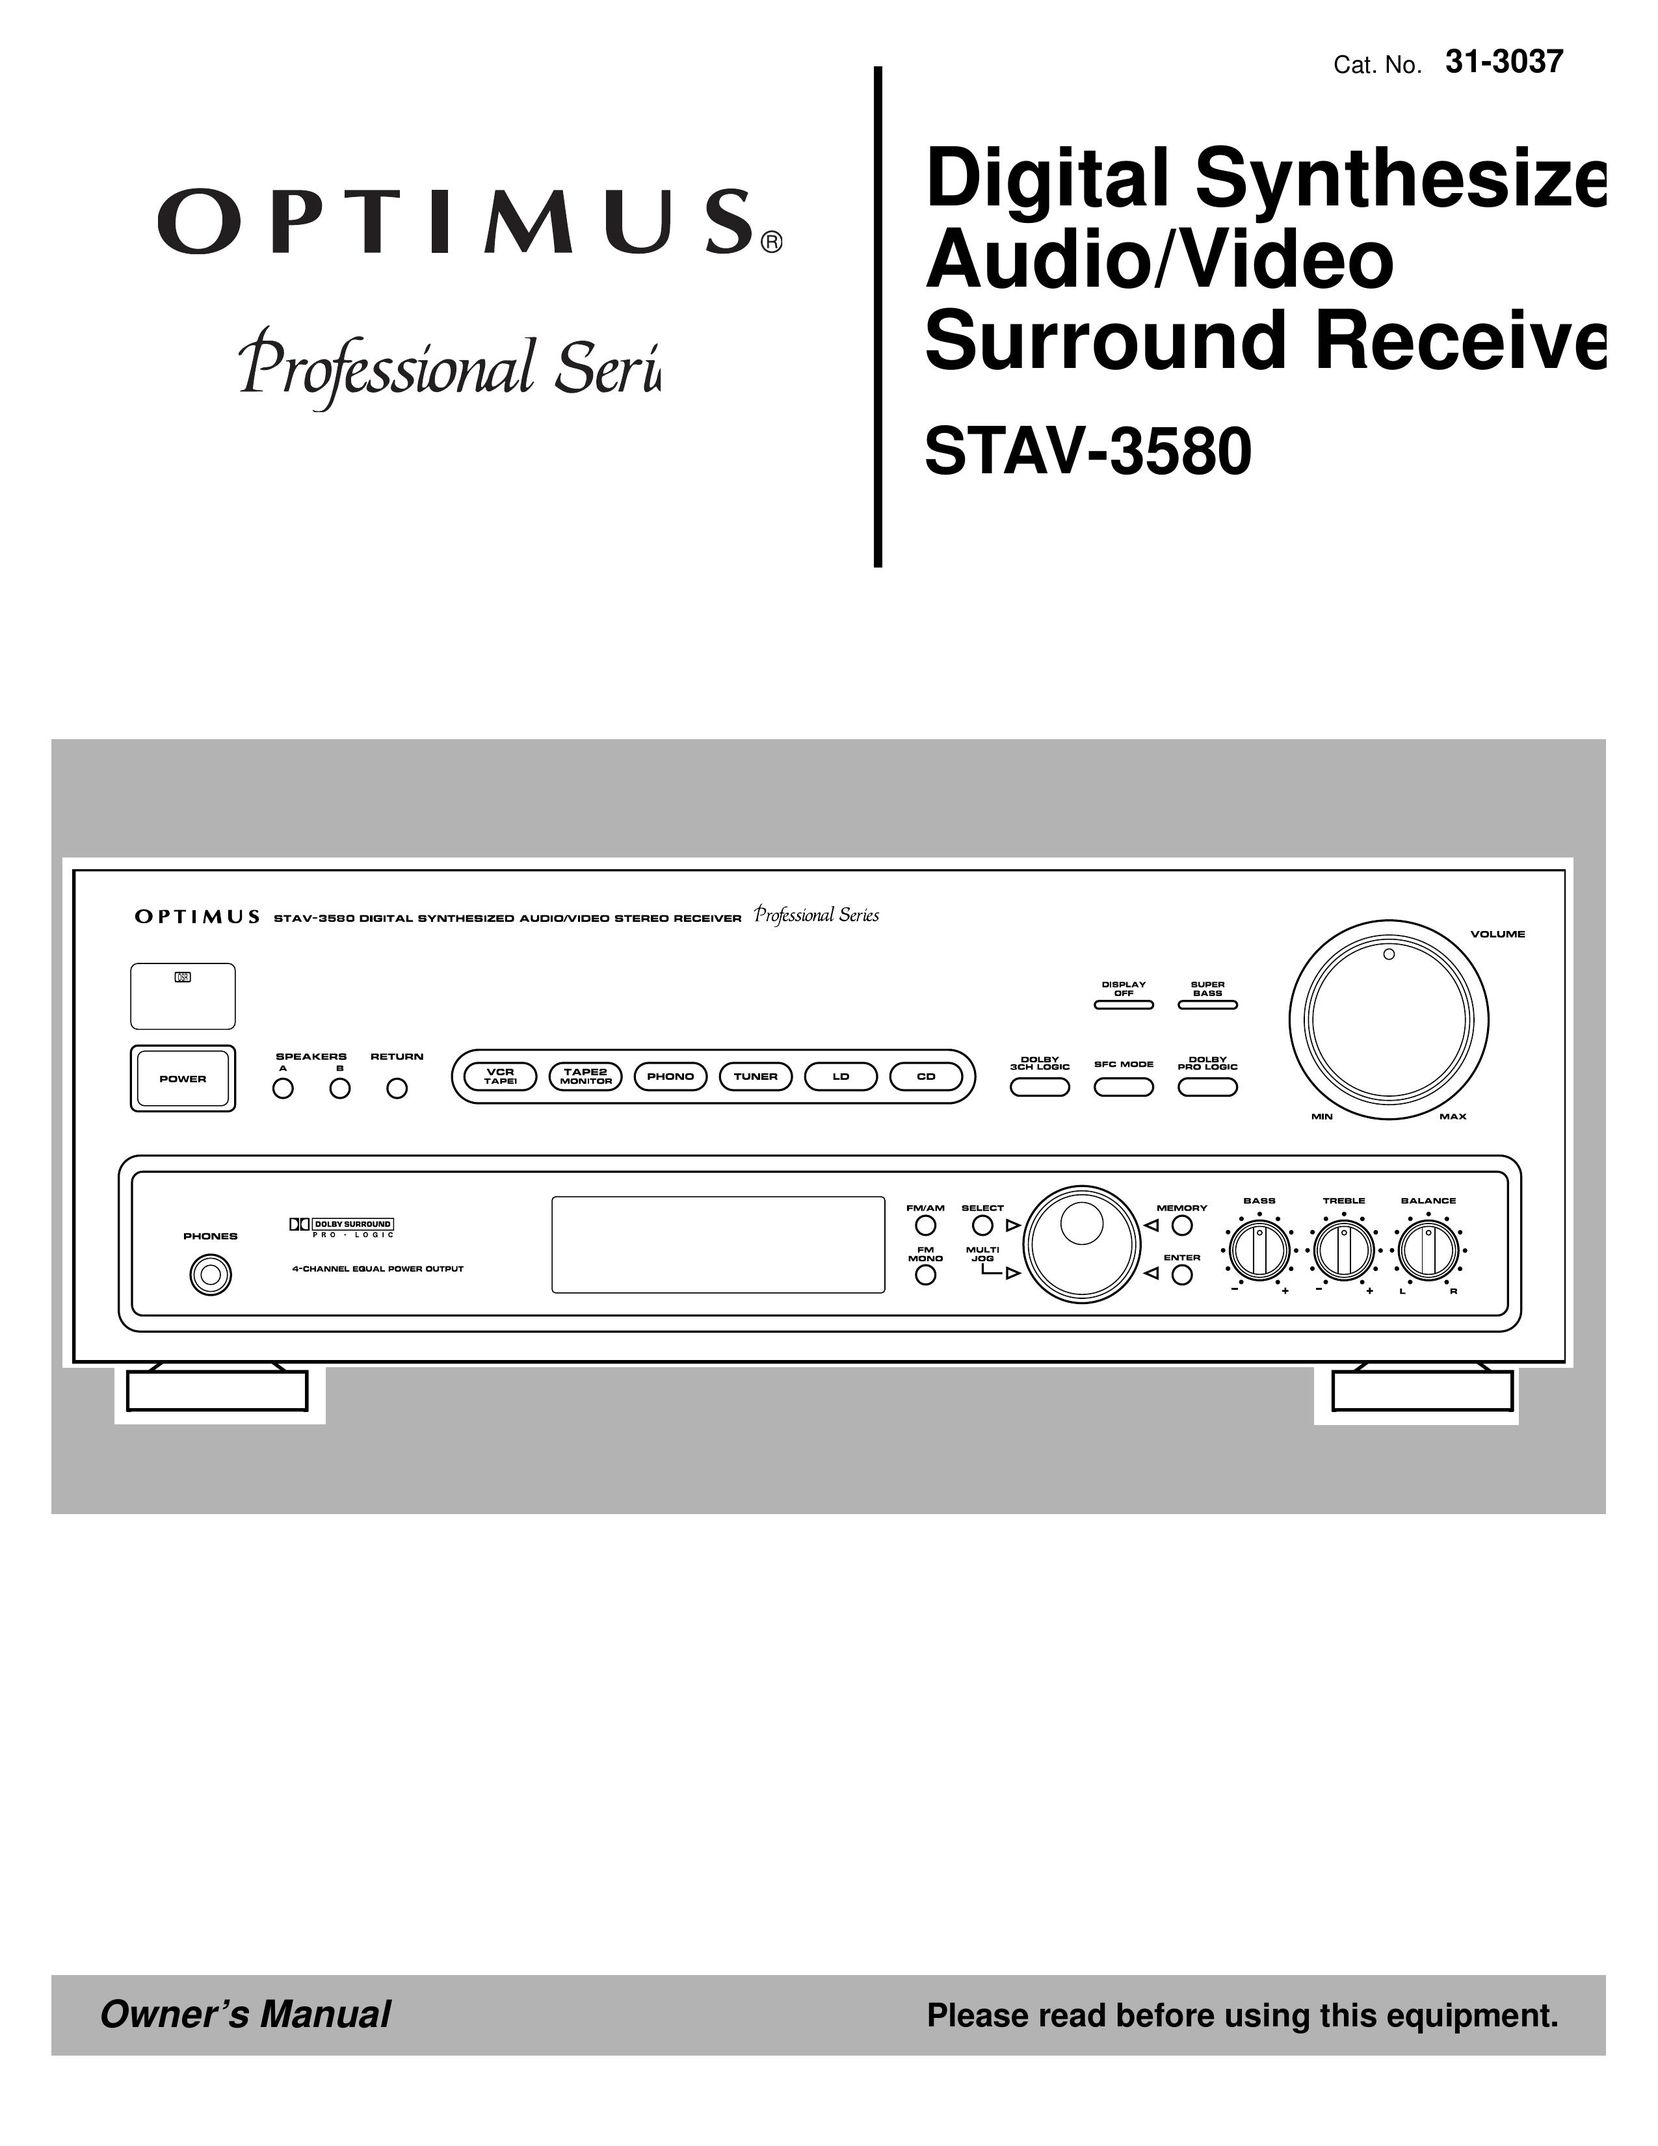 Optimus STAV-3580 Home Theater System User Manual